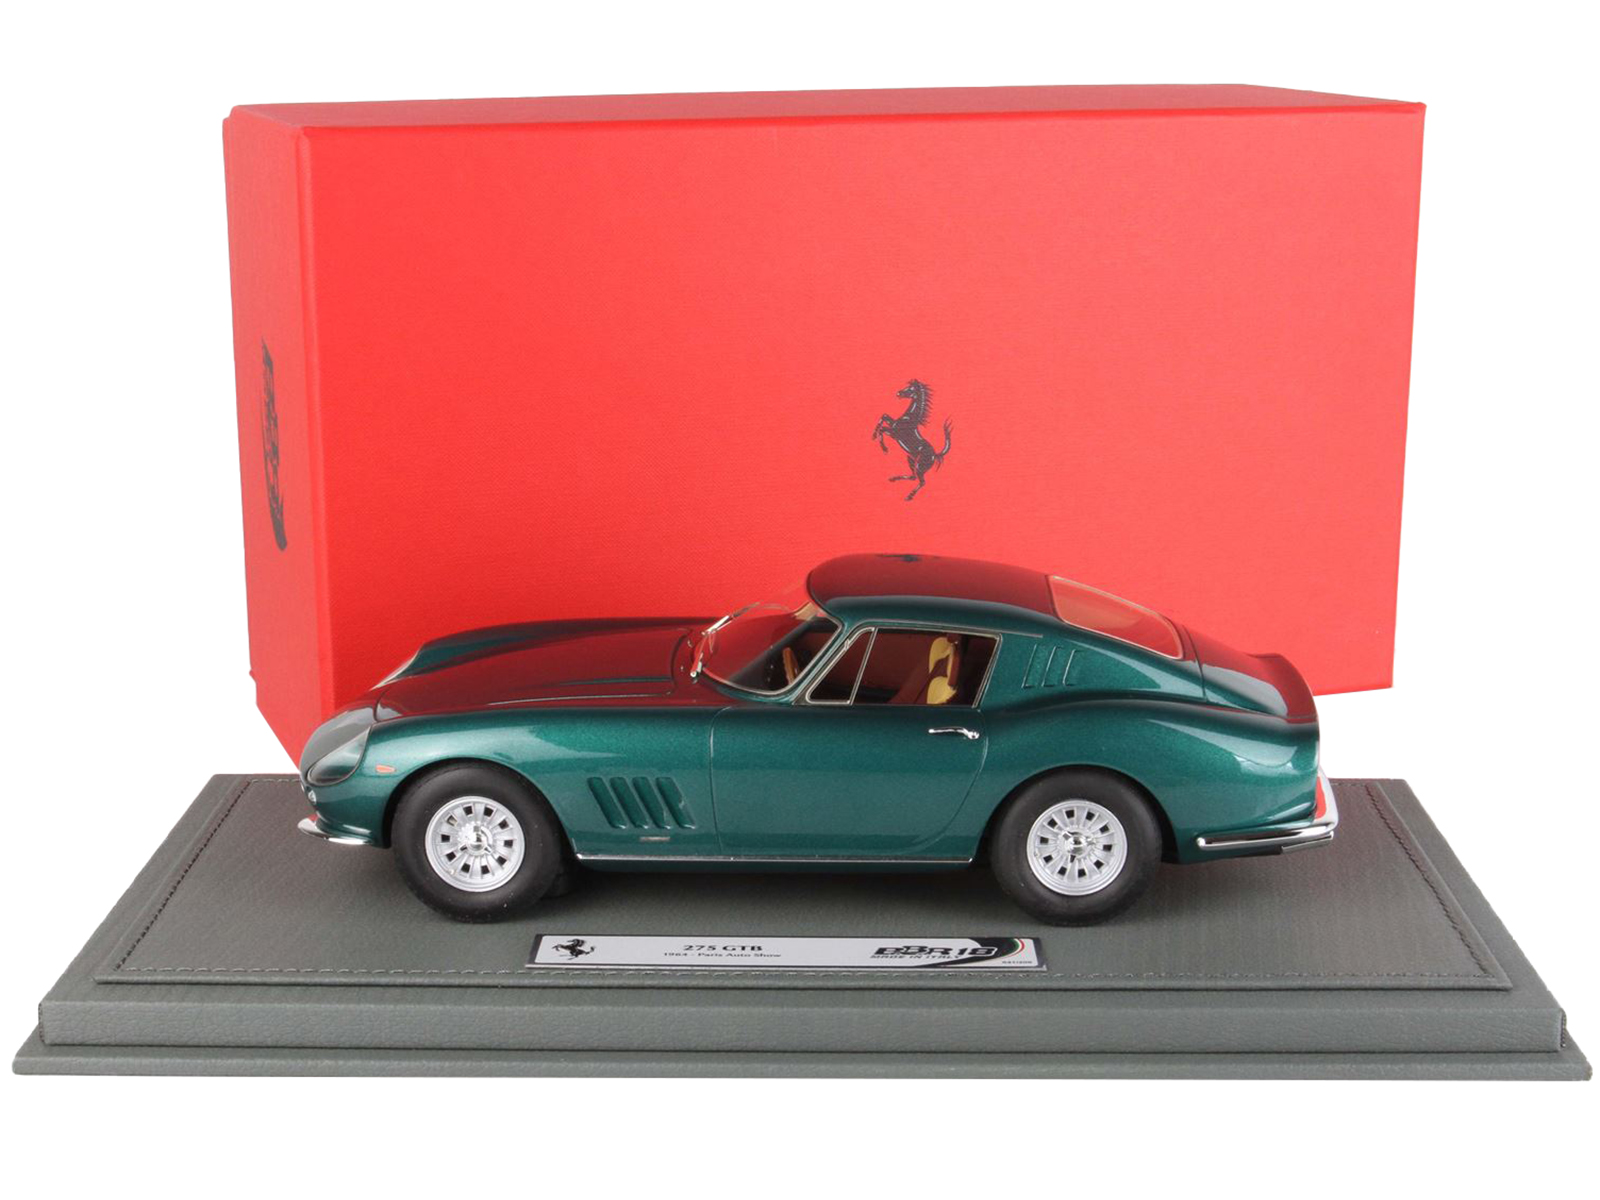 Ferrari 275 GTB Dark Green Metallic Paris Auto Show (1964) with DISPLAY CASE Limited Edition to 200 pieces Worldwide 1/18 Model Car by BBR